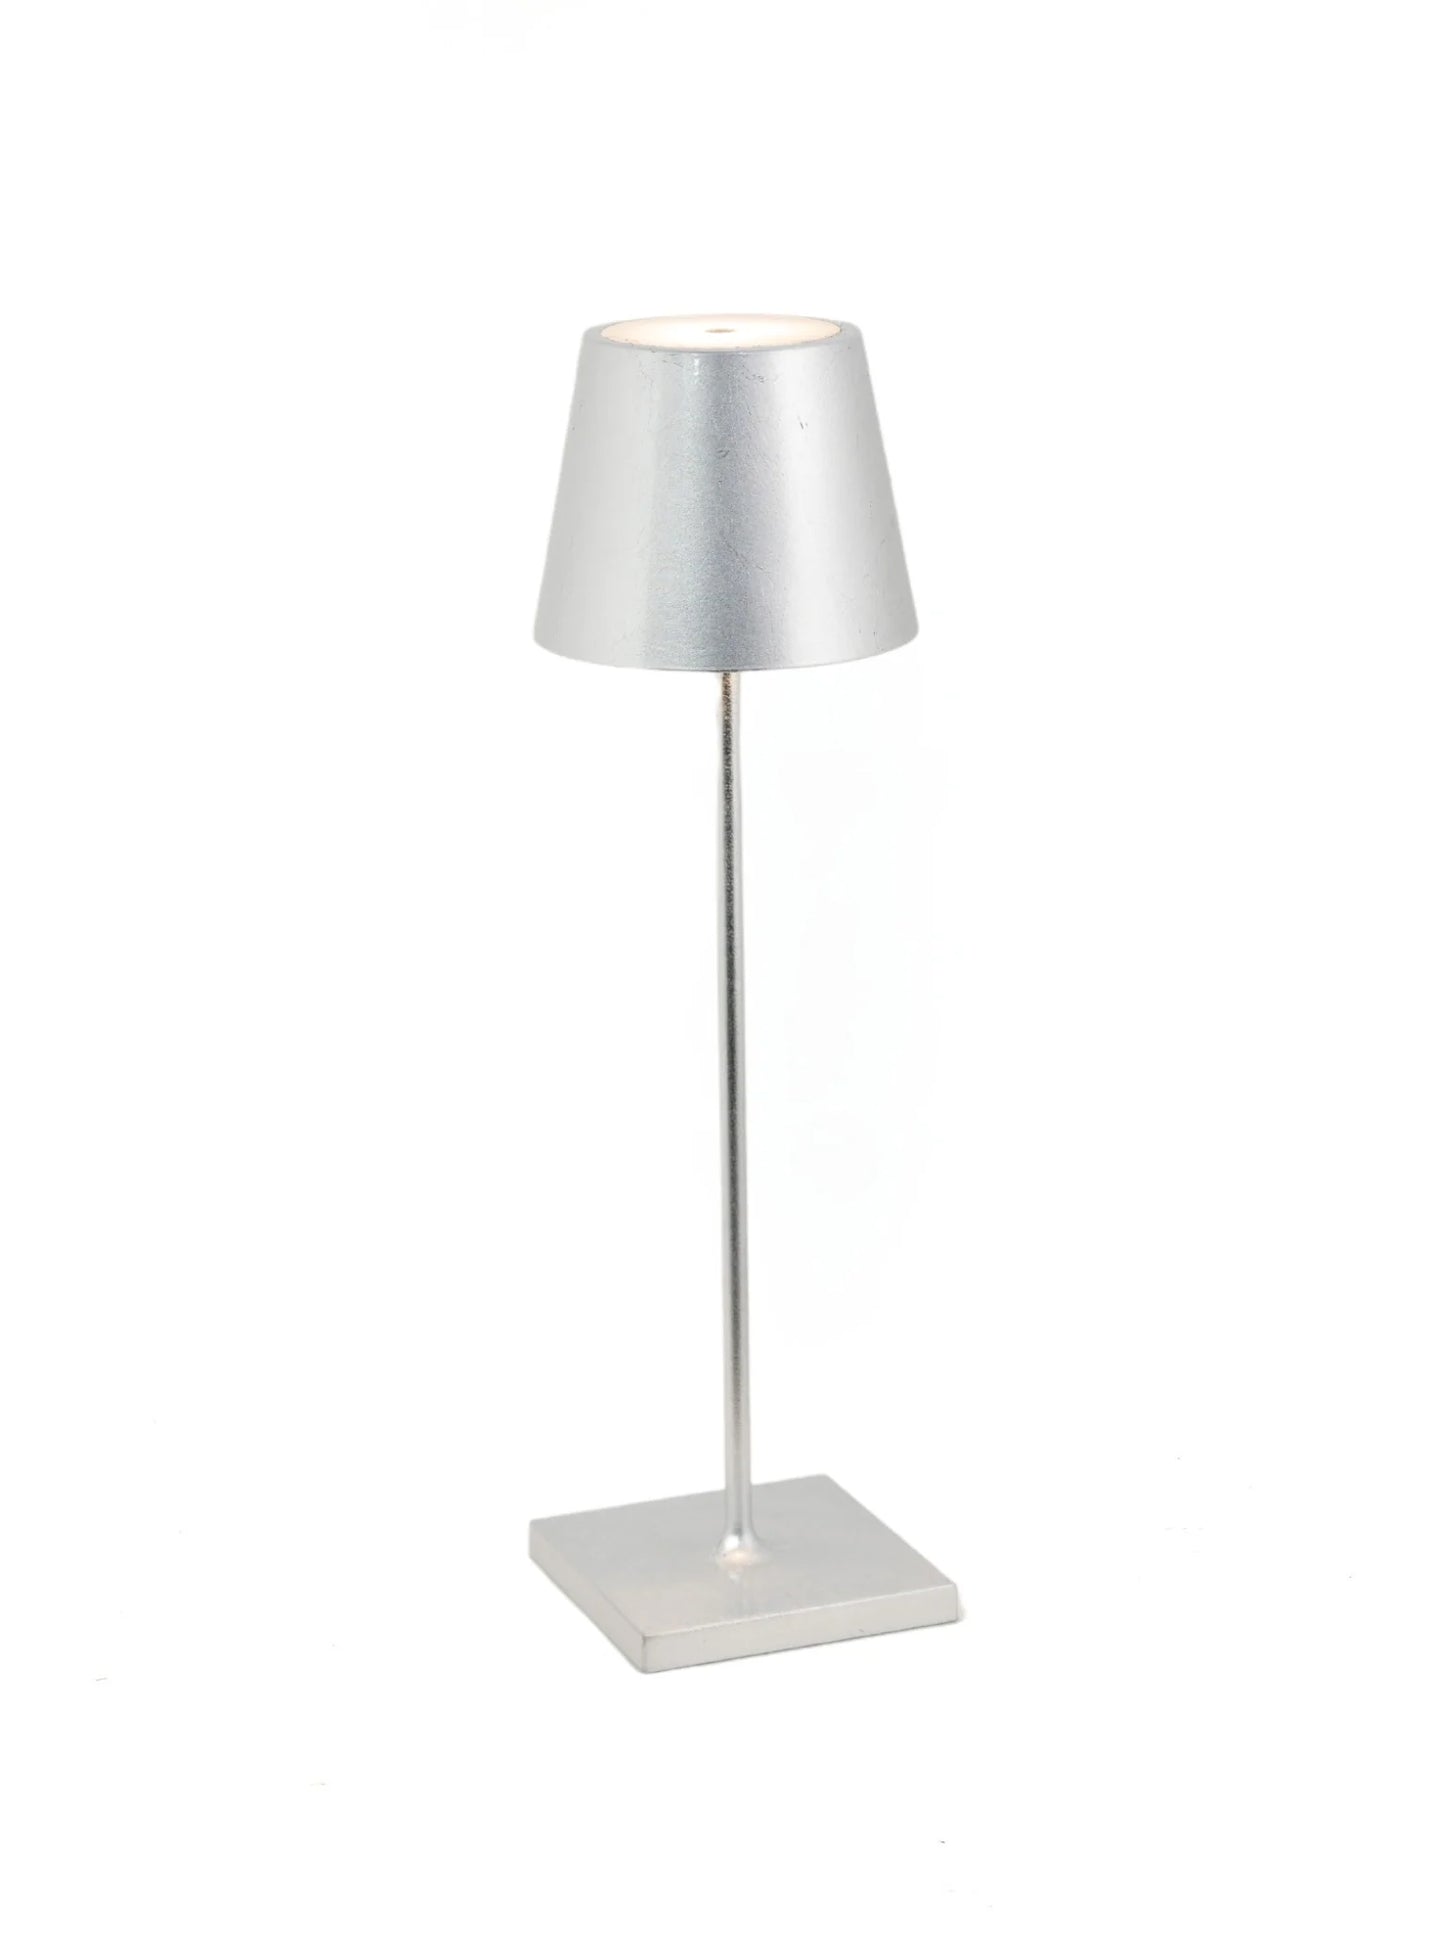 Poldina Pro Cordless LED Lamp